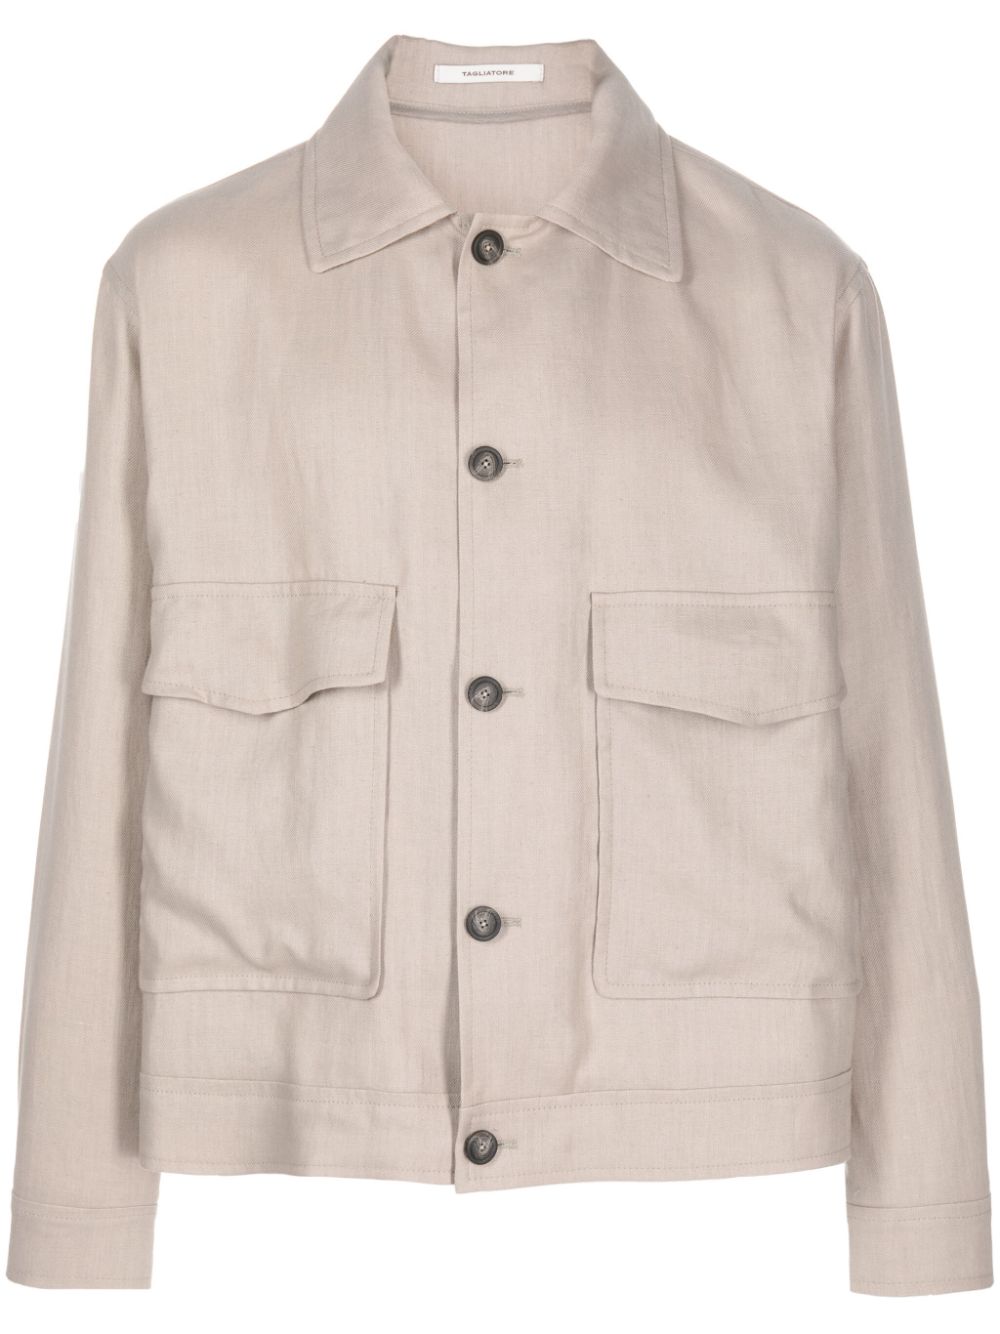 Tagliatore linen shirt jacket - Neutrals von Tagliatore